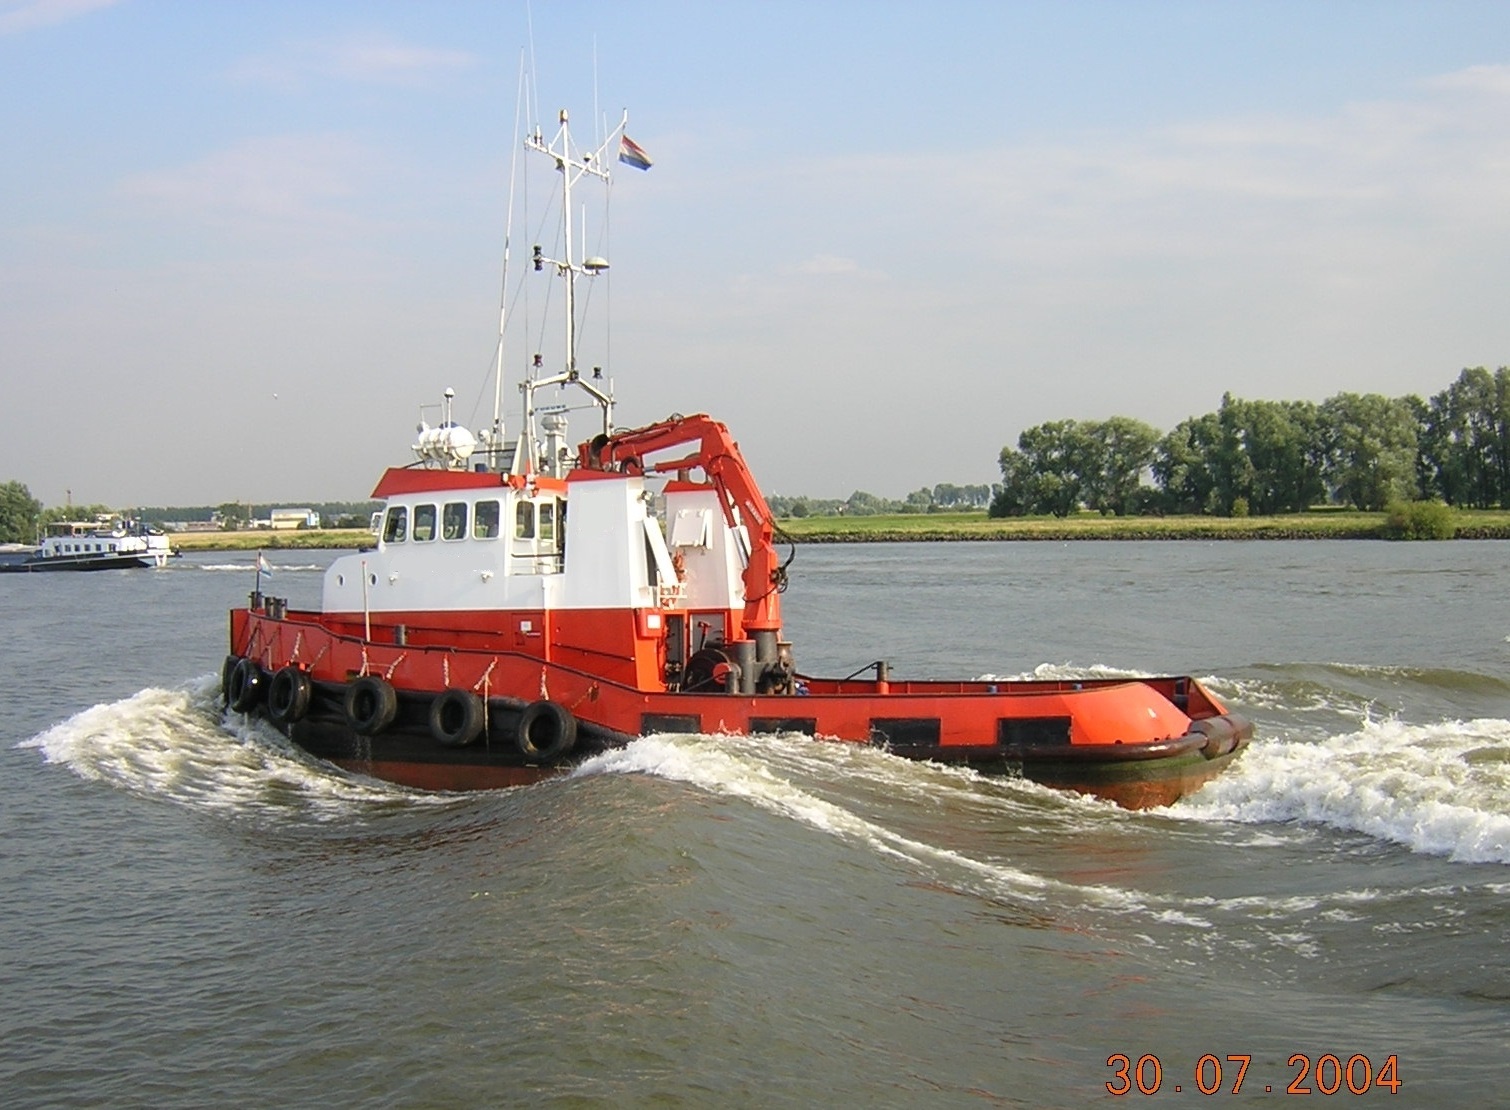 Twin screw tug/workboat, 20 tons bollard pull